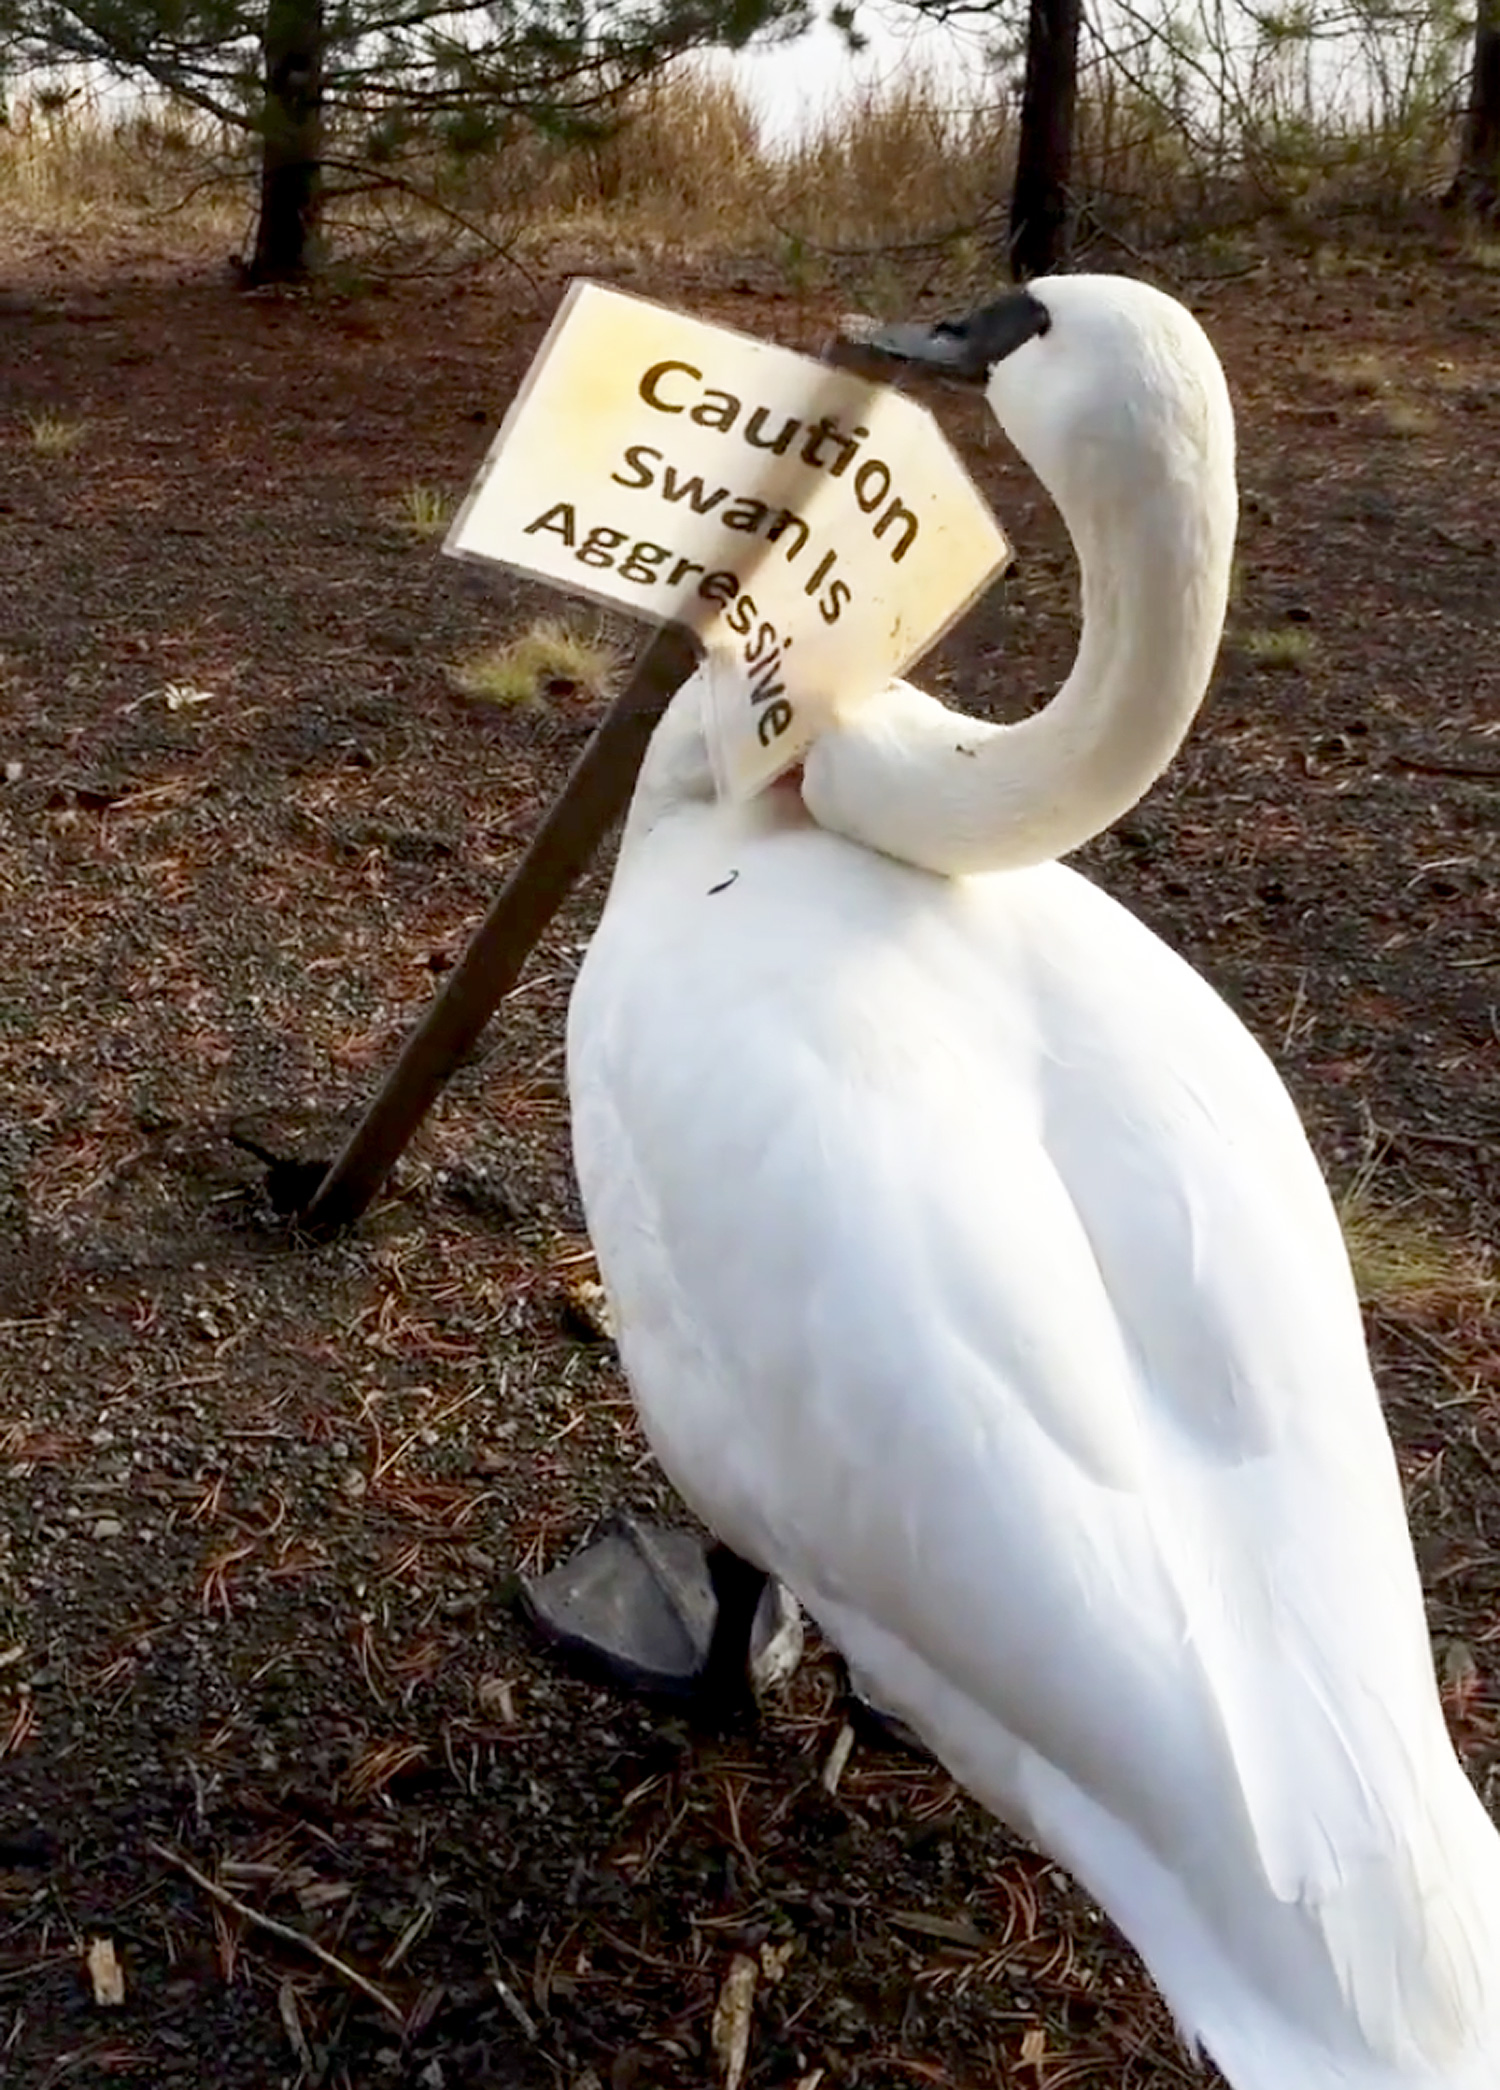 Aggressive Swan Attacks Sign Saying It's Aggressive | PEOPLE.com